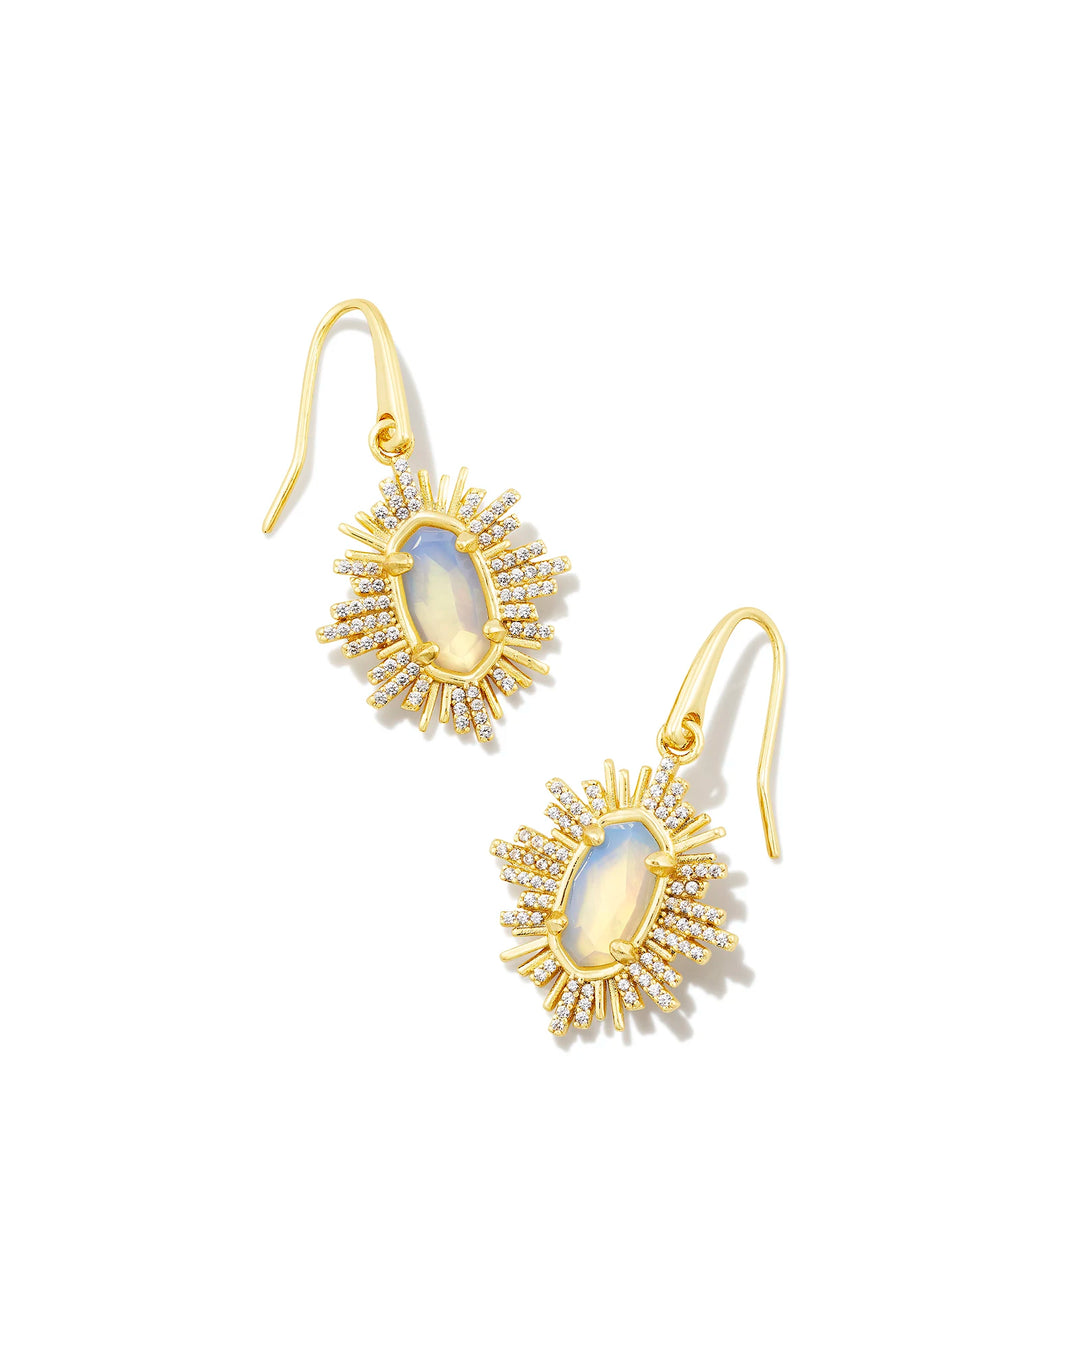 Kendra Scott Grayson Gold Sunburst Drop Earrings in Iridescent Opalite Illusion